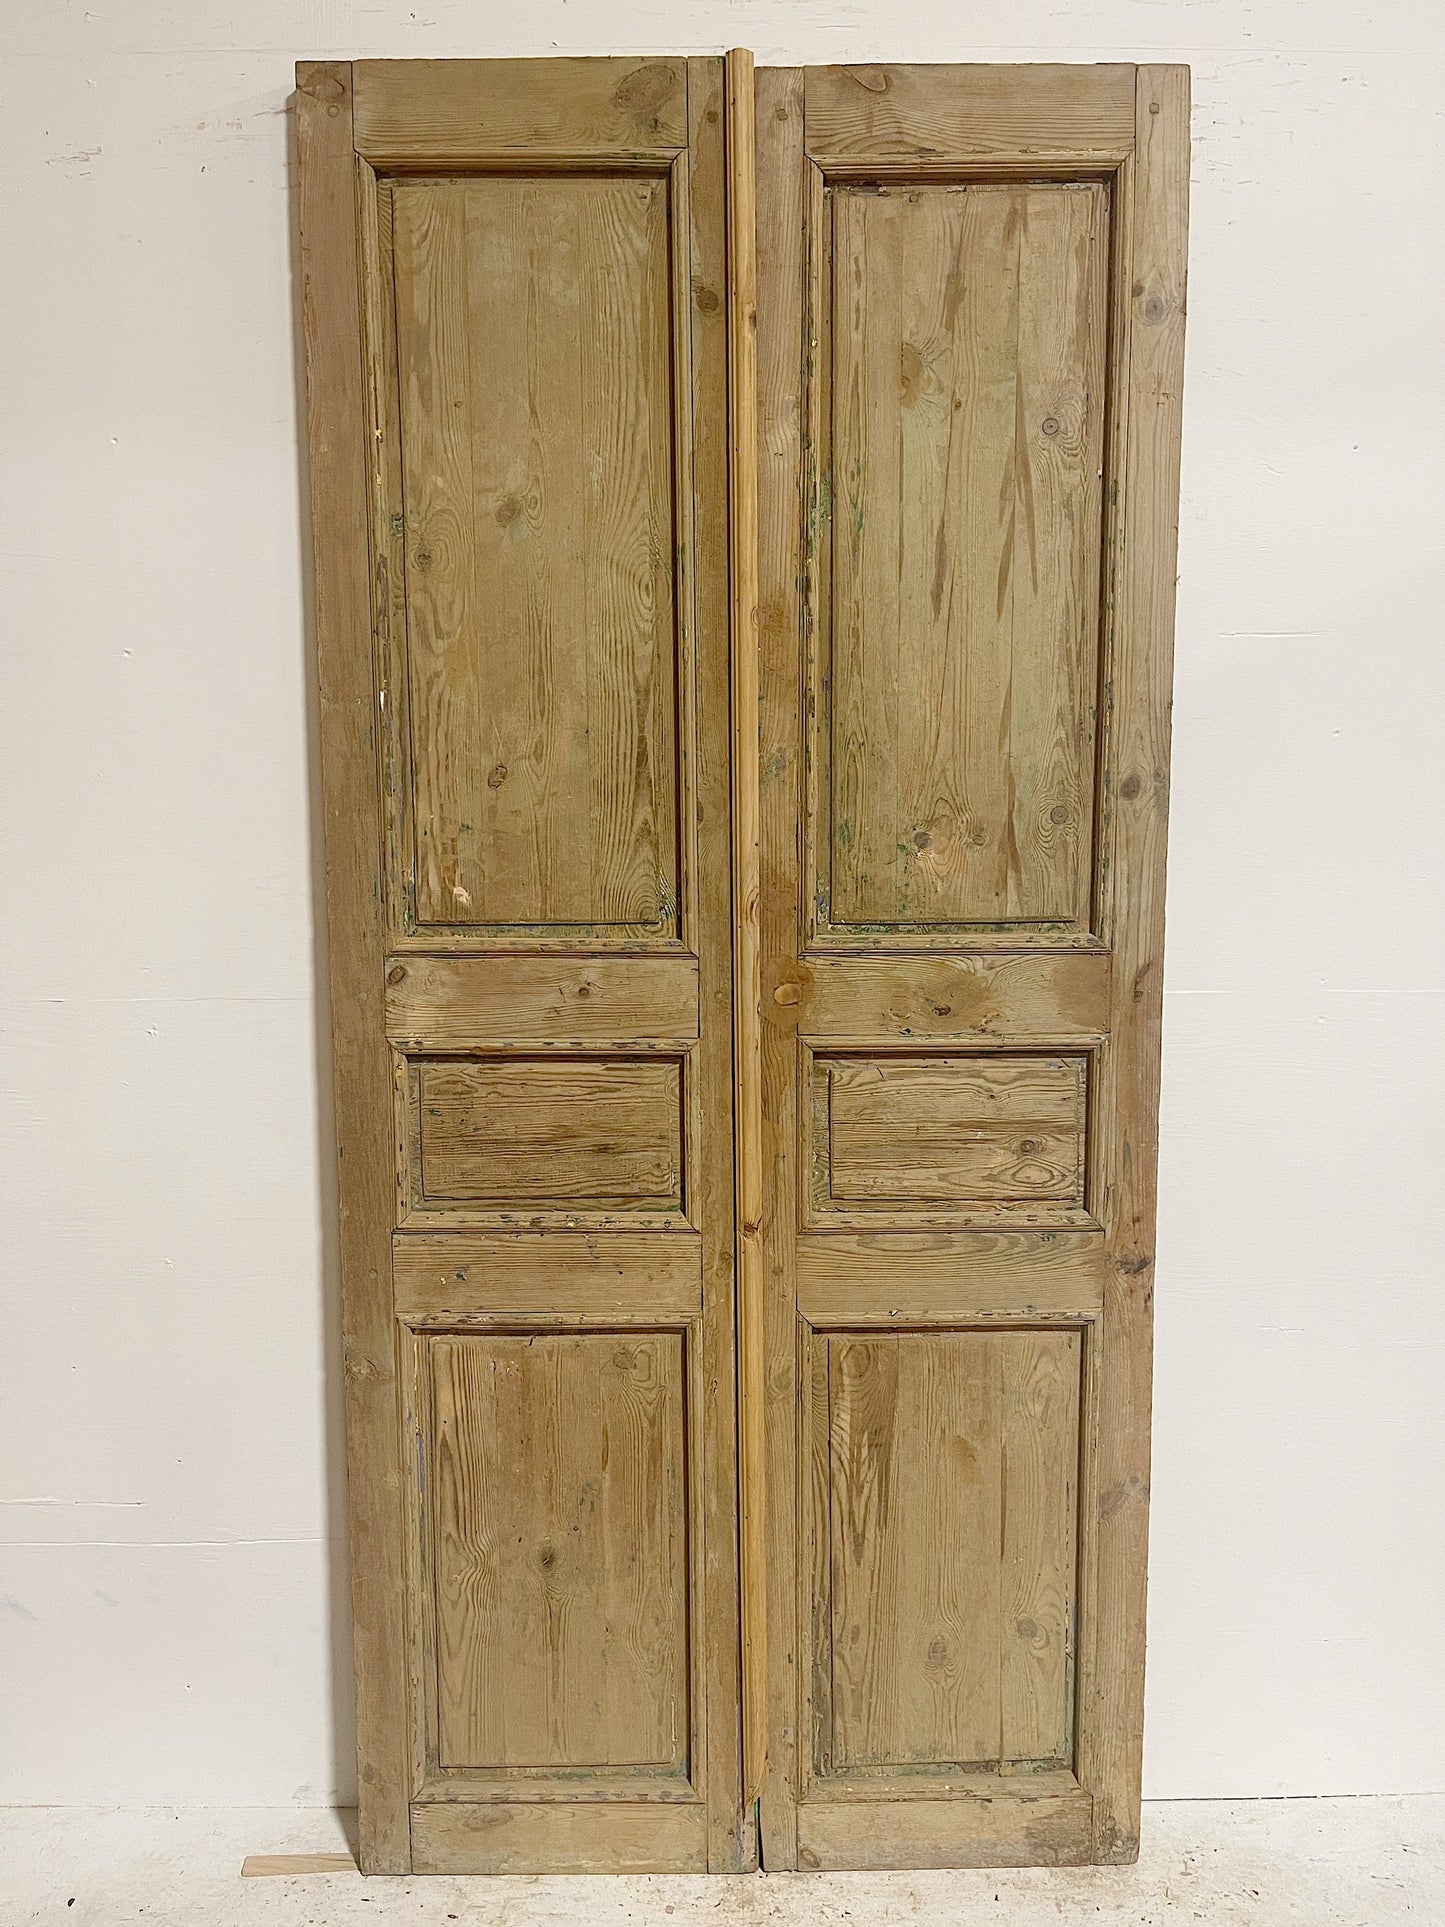 Antique French doors (94.75x43.5) E1019